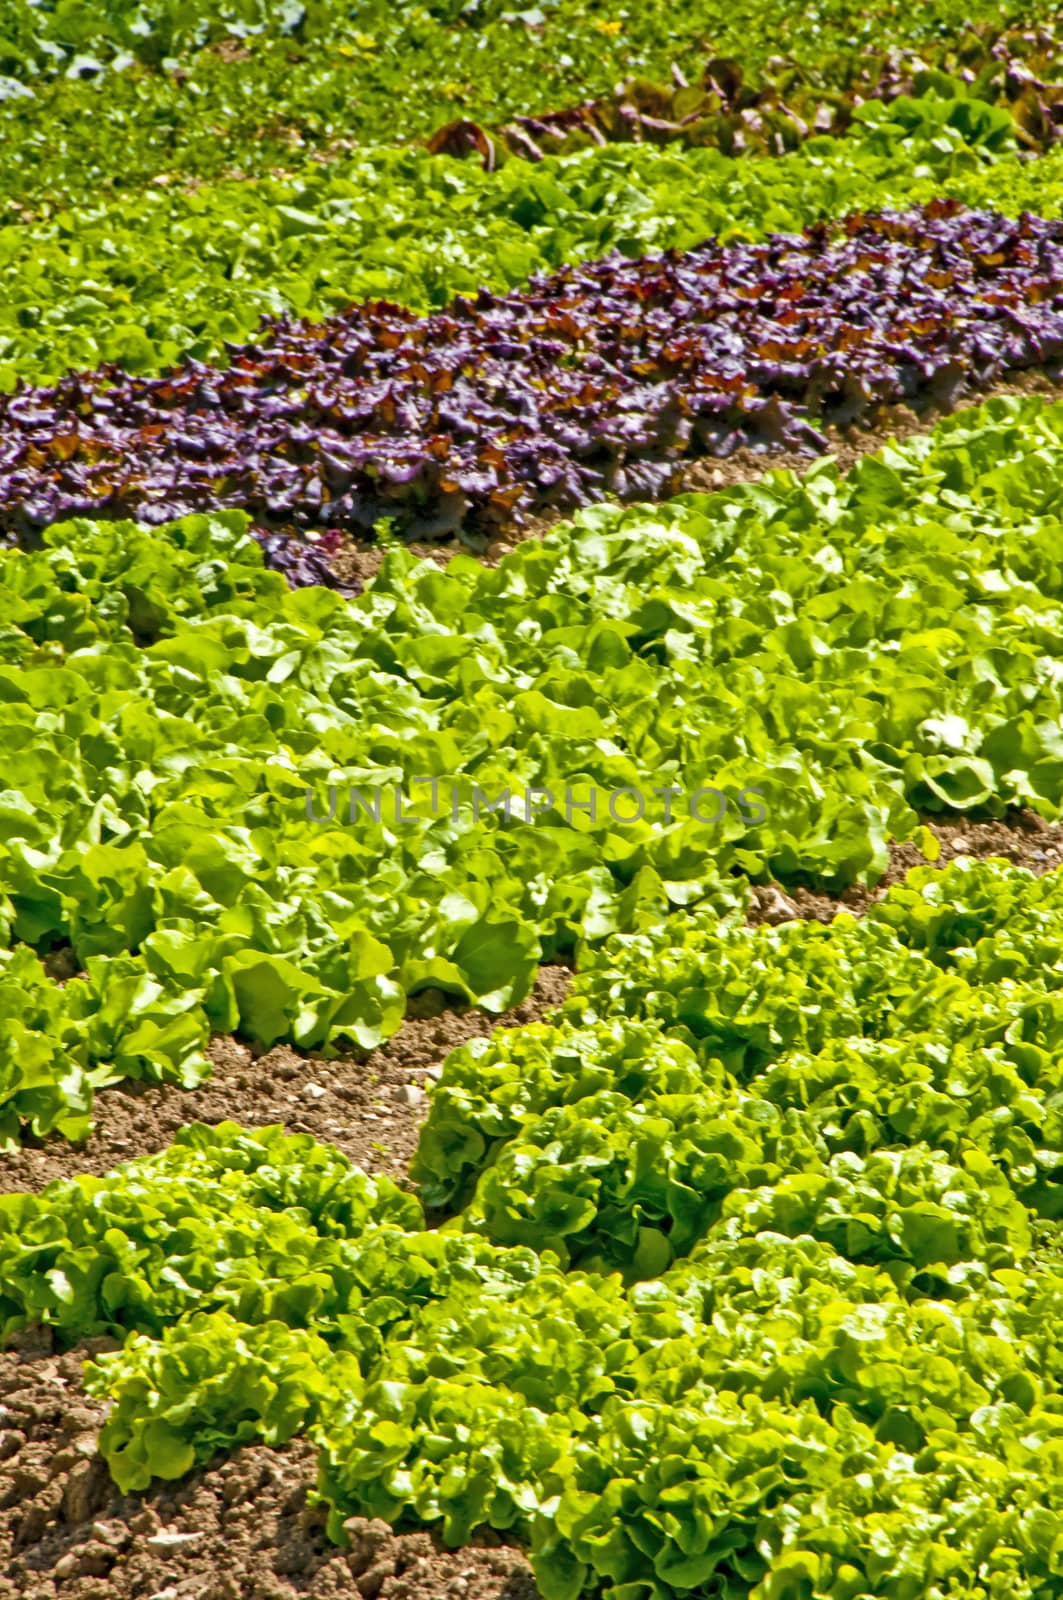 salad cultivation by Jochen